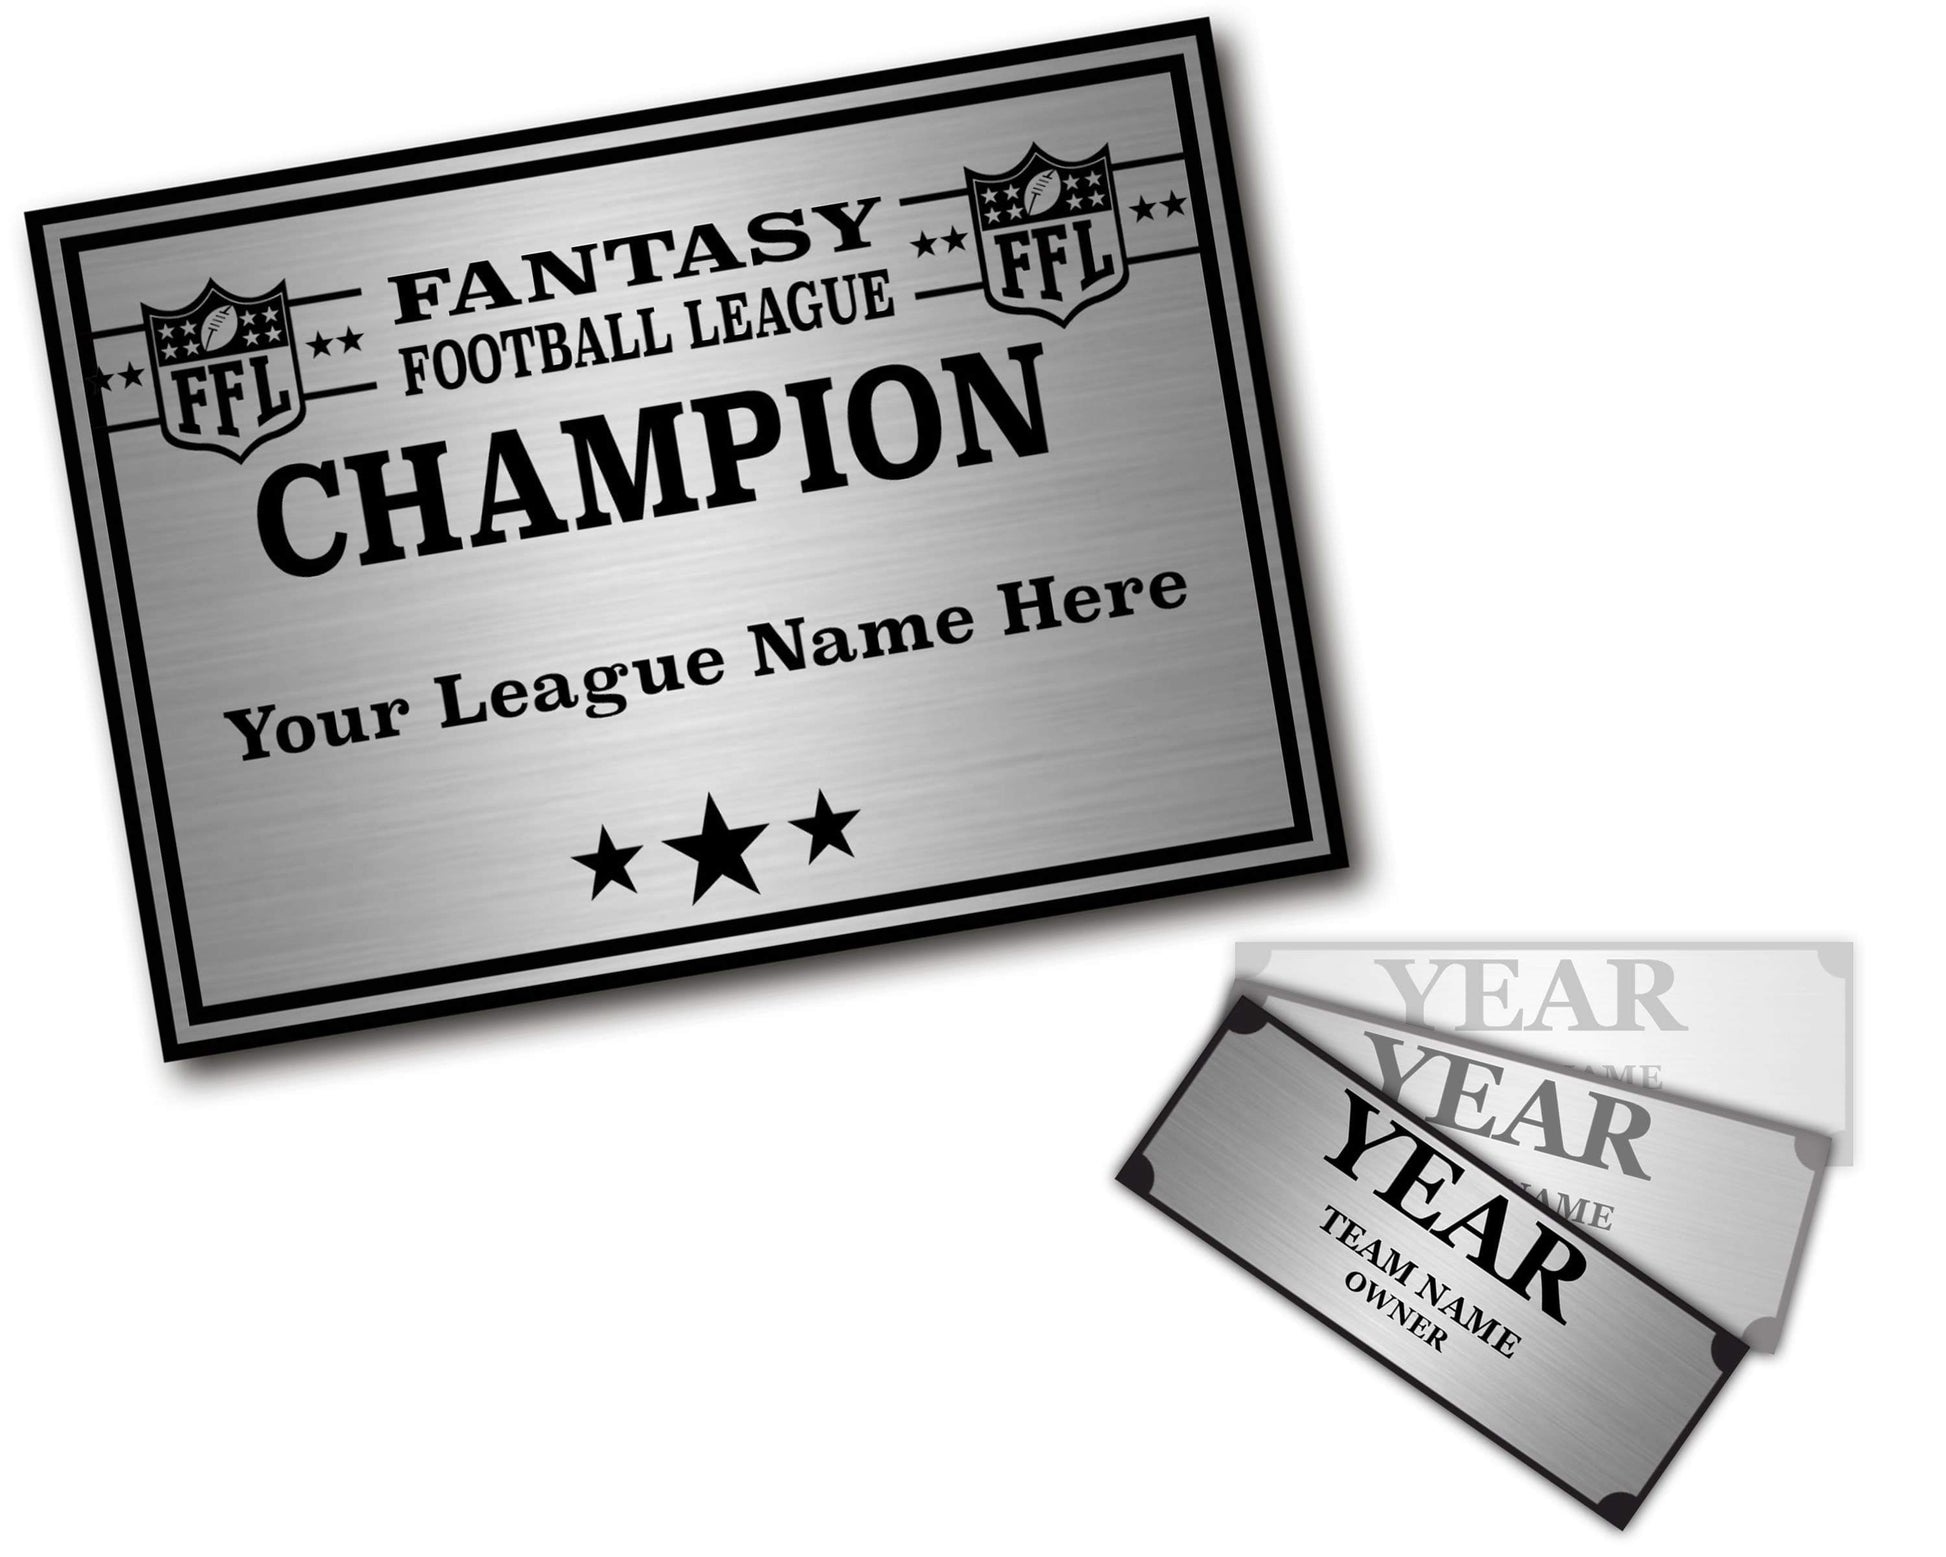 TrophySmack Perpetual Trophy Engravings - Square Base - Fantasy Football - Silver